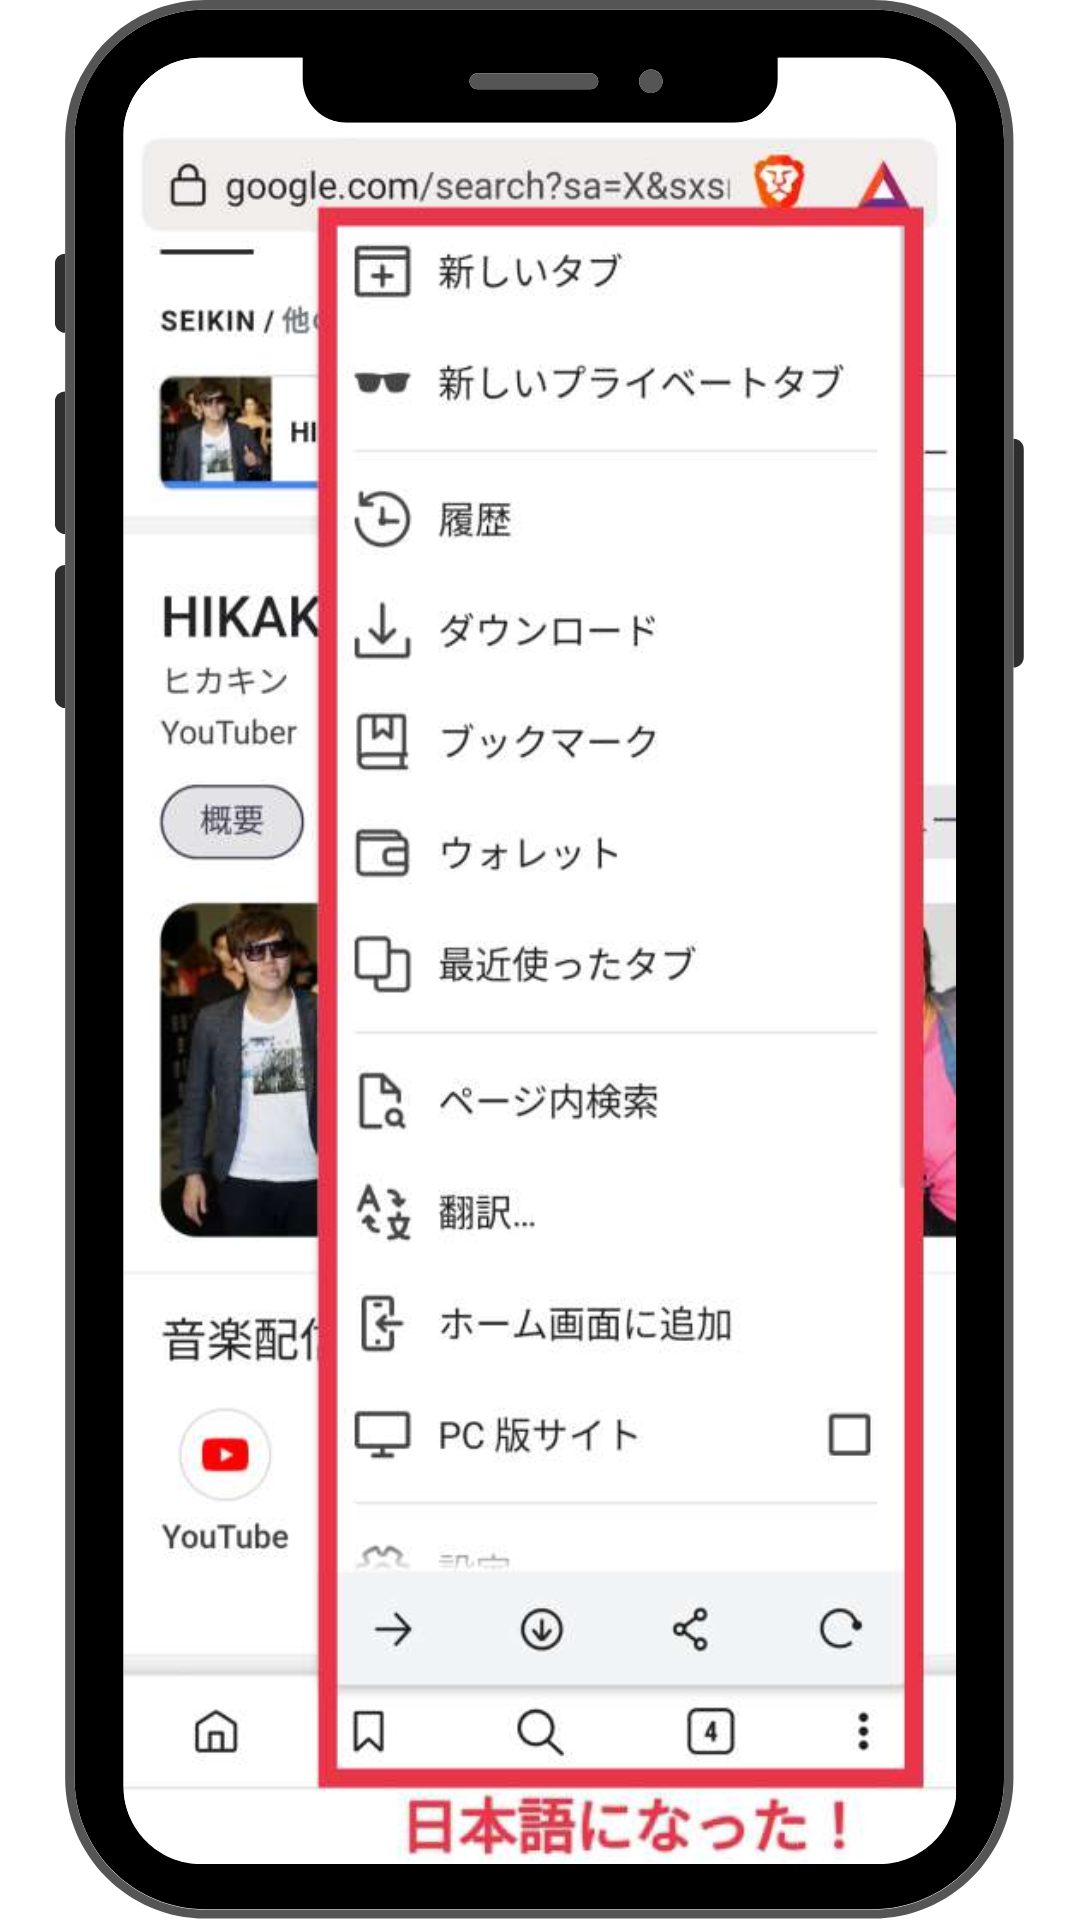 Braveブラウザ Android版 日本語に翻訳する方法6